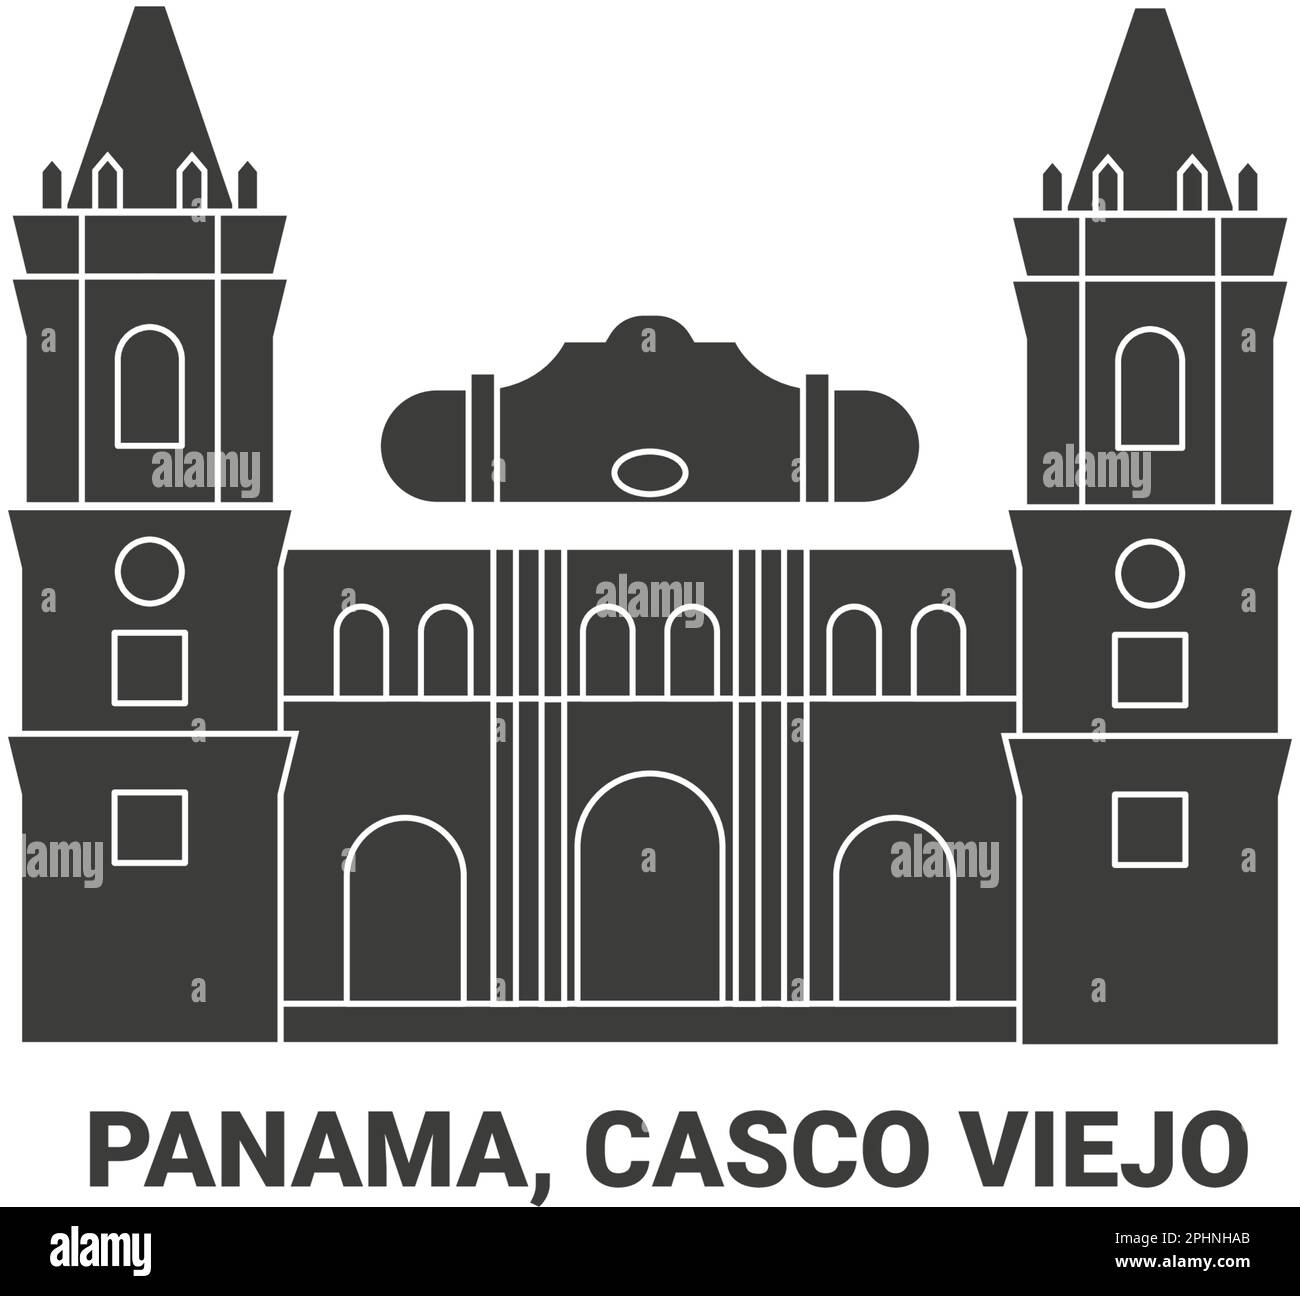 Panama, Casco Viejo, travel landmark vector illustration Stock Vector